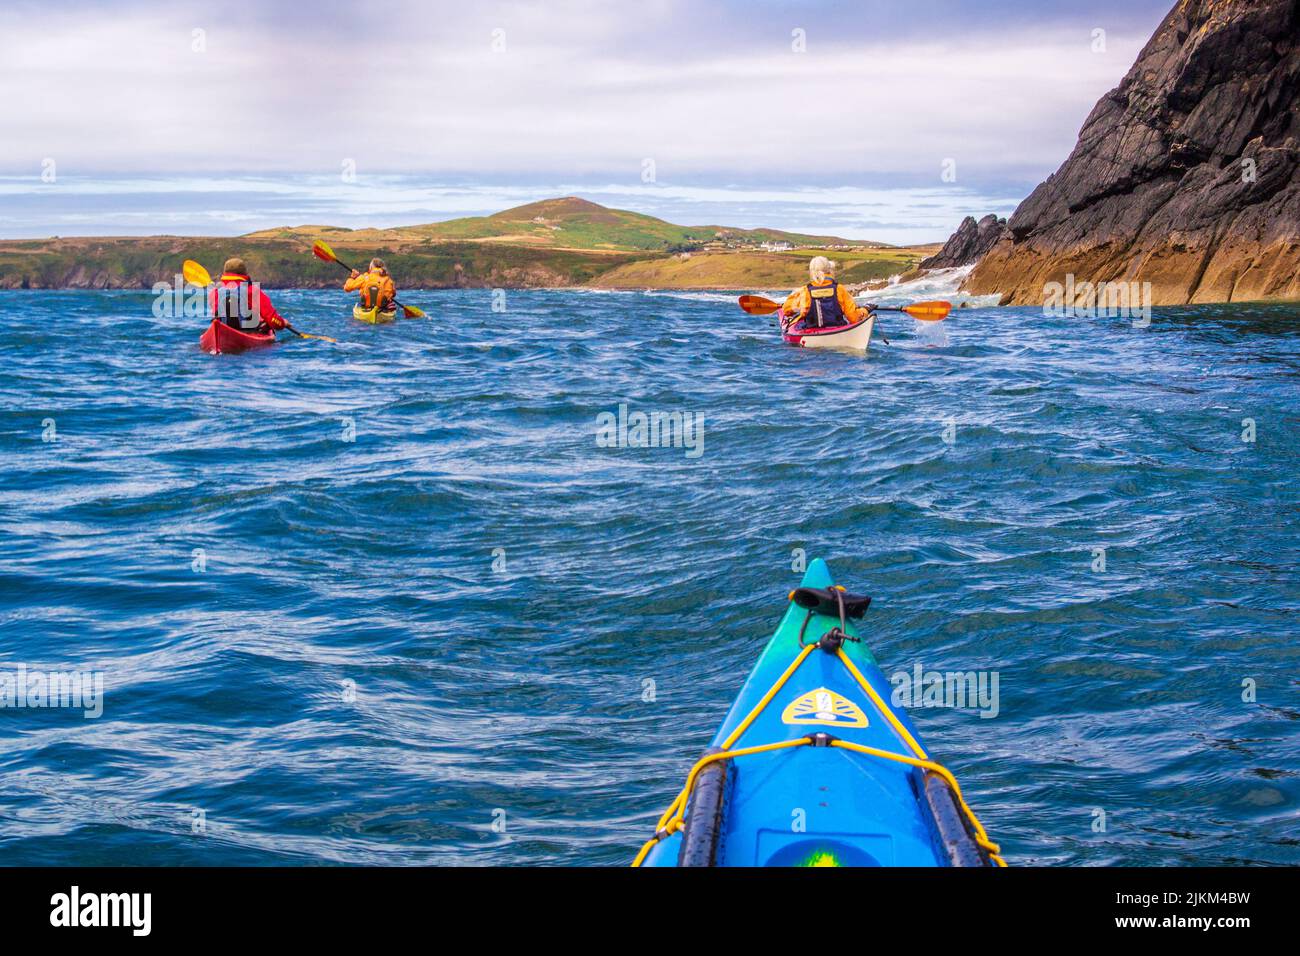 Kayak in mare al largo della costa della penisola di Llyn / Lleyn vicino ad Aberdaron, Galles del Nord, Regno Unito Foto Stock